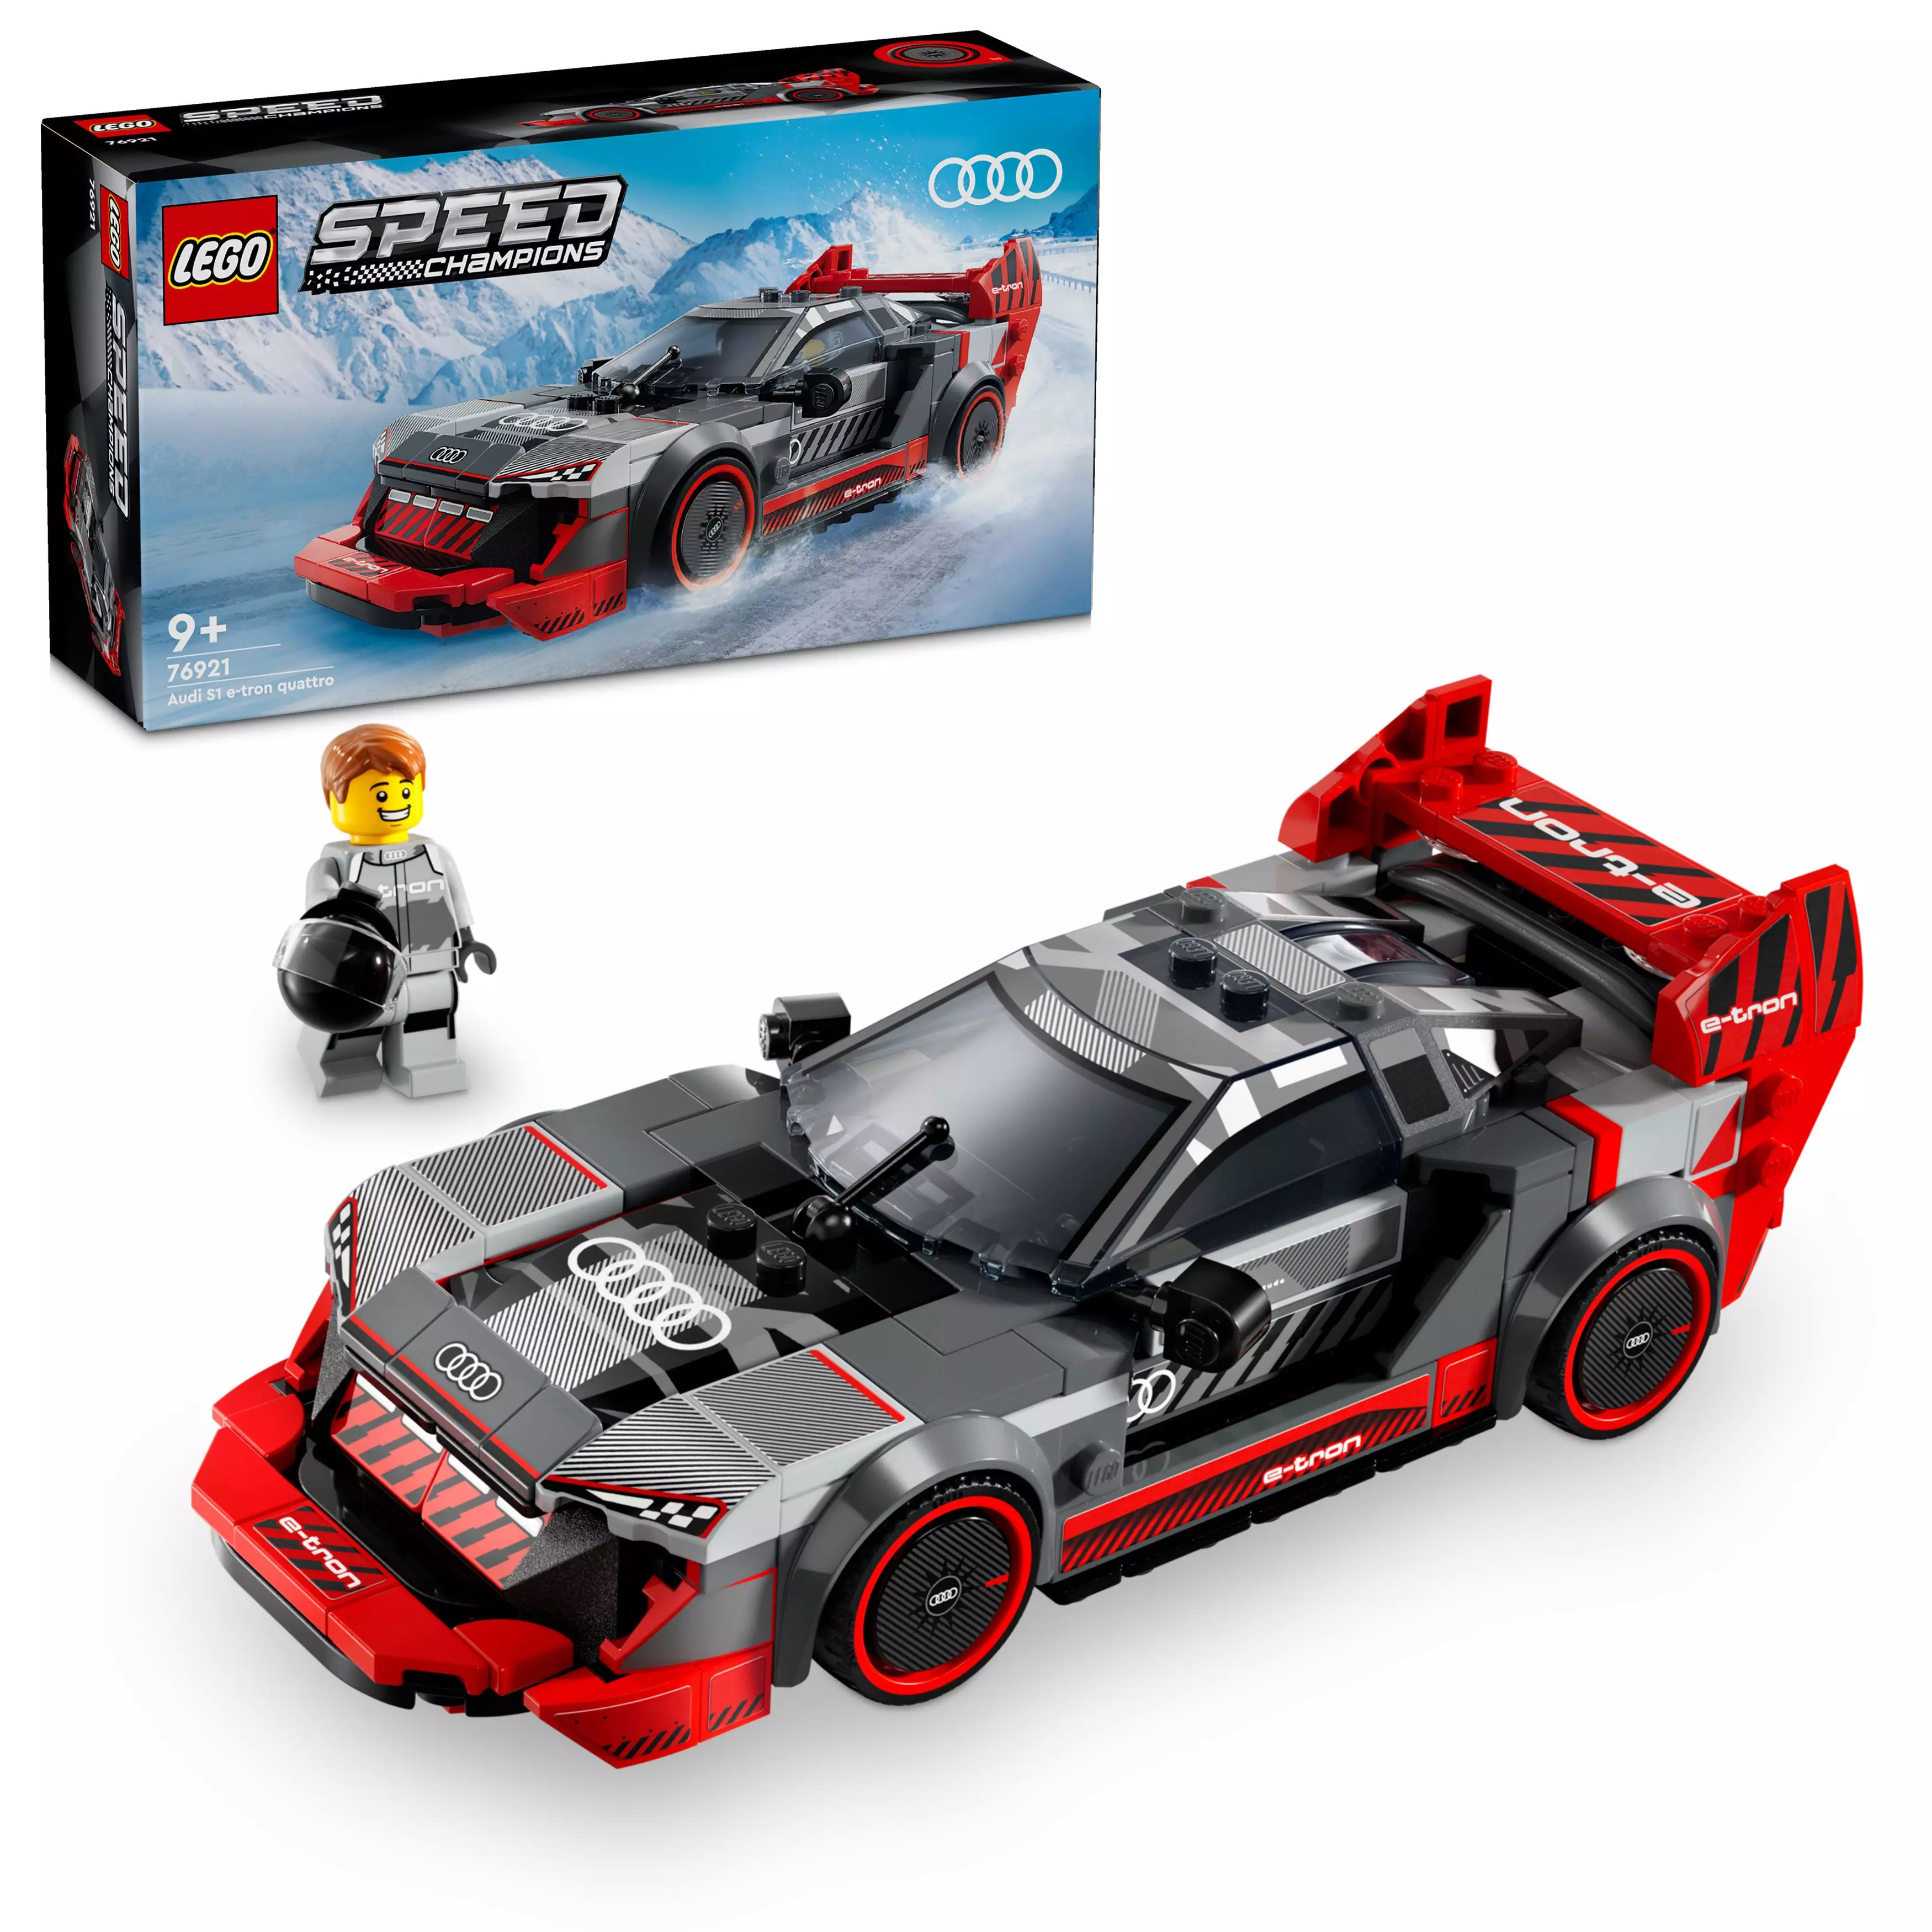 Lego Speed Champions Audi S1 E-Tron